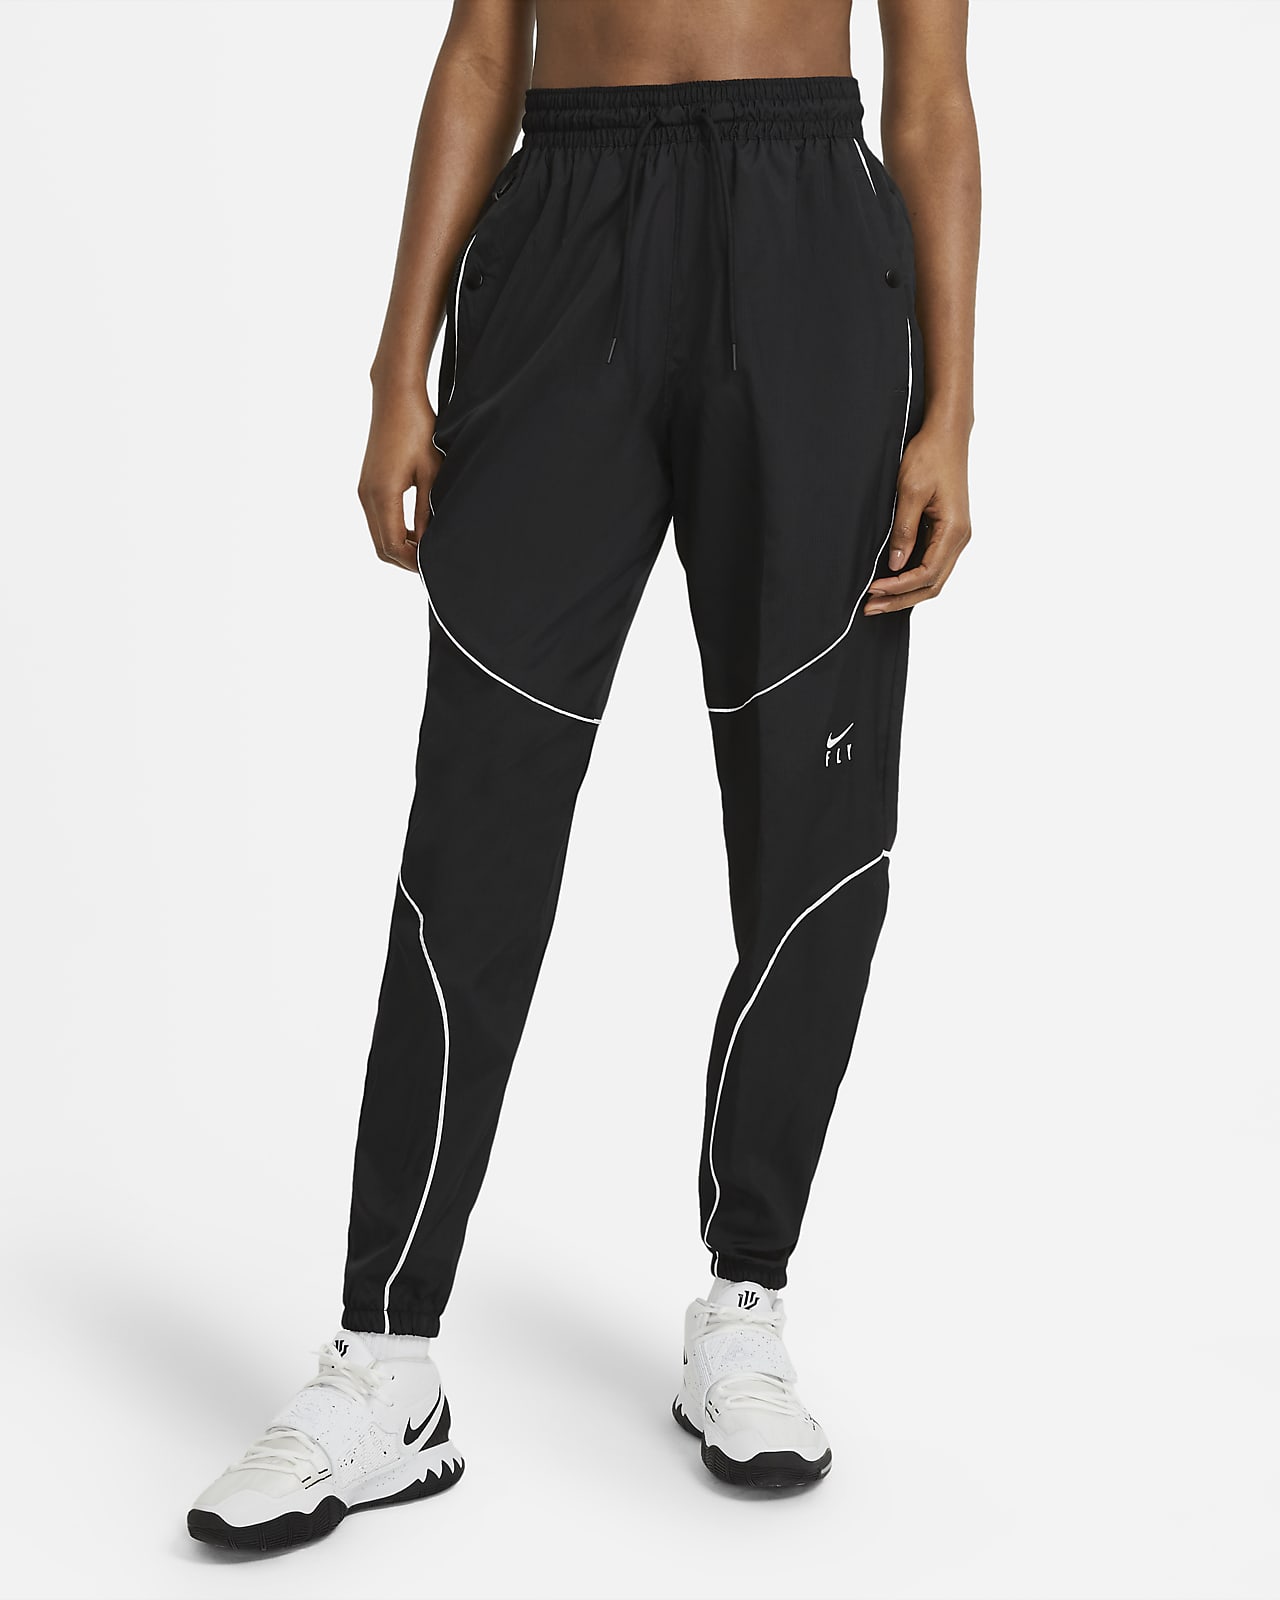 Nike Swoosh Fly Basketballhose für 